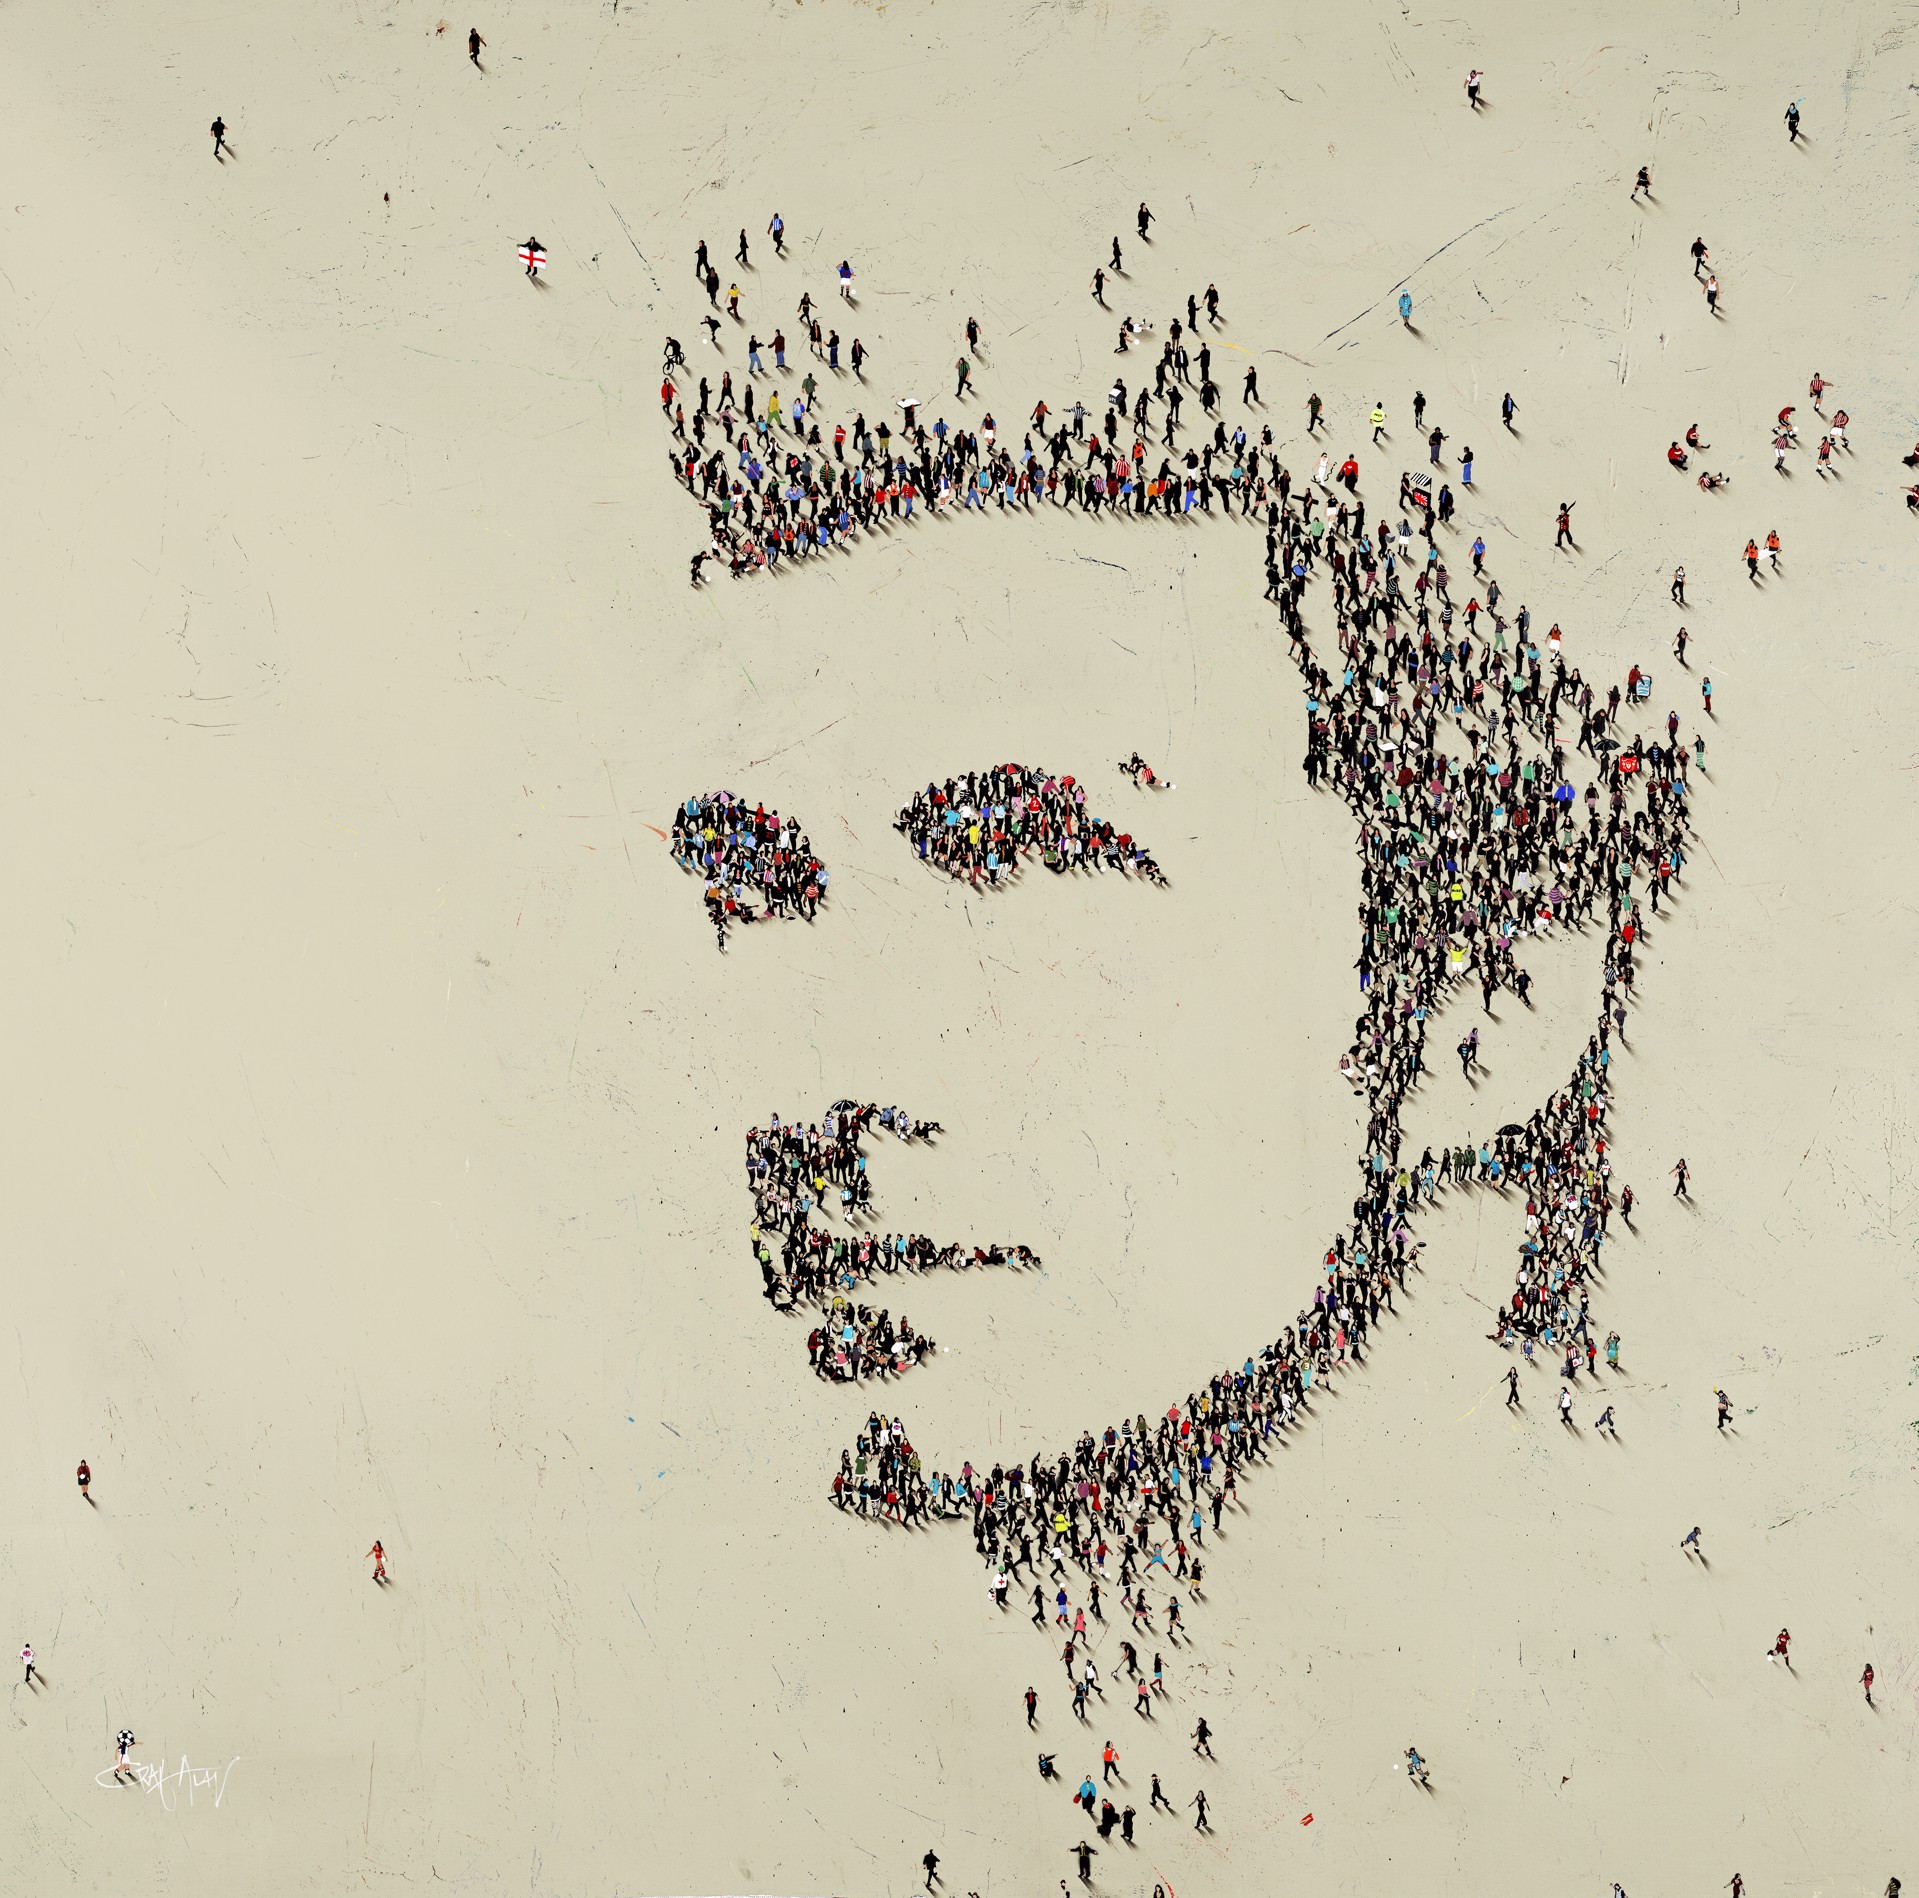 David Beckham by Craig Alan, Populus Figurative